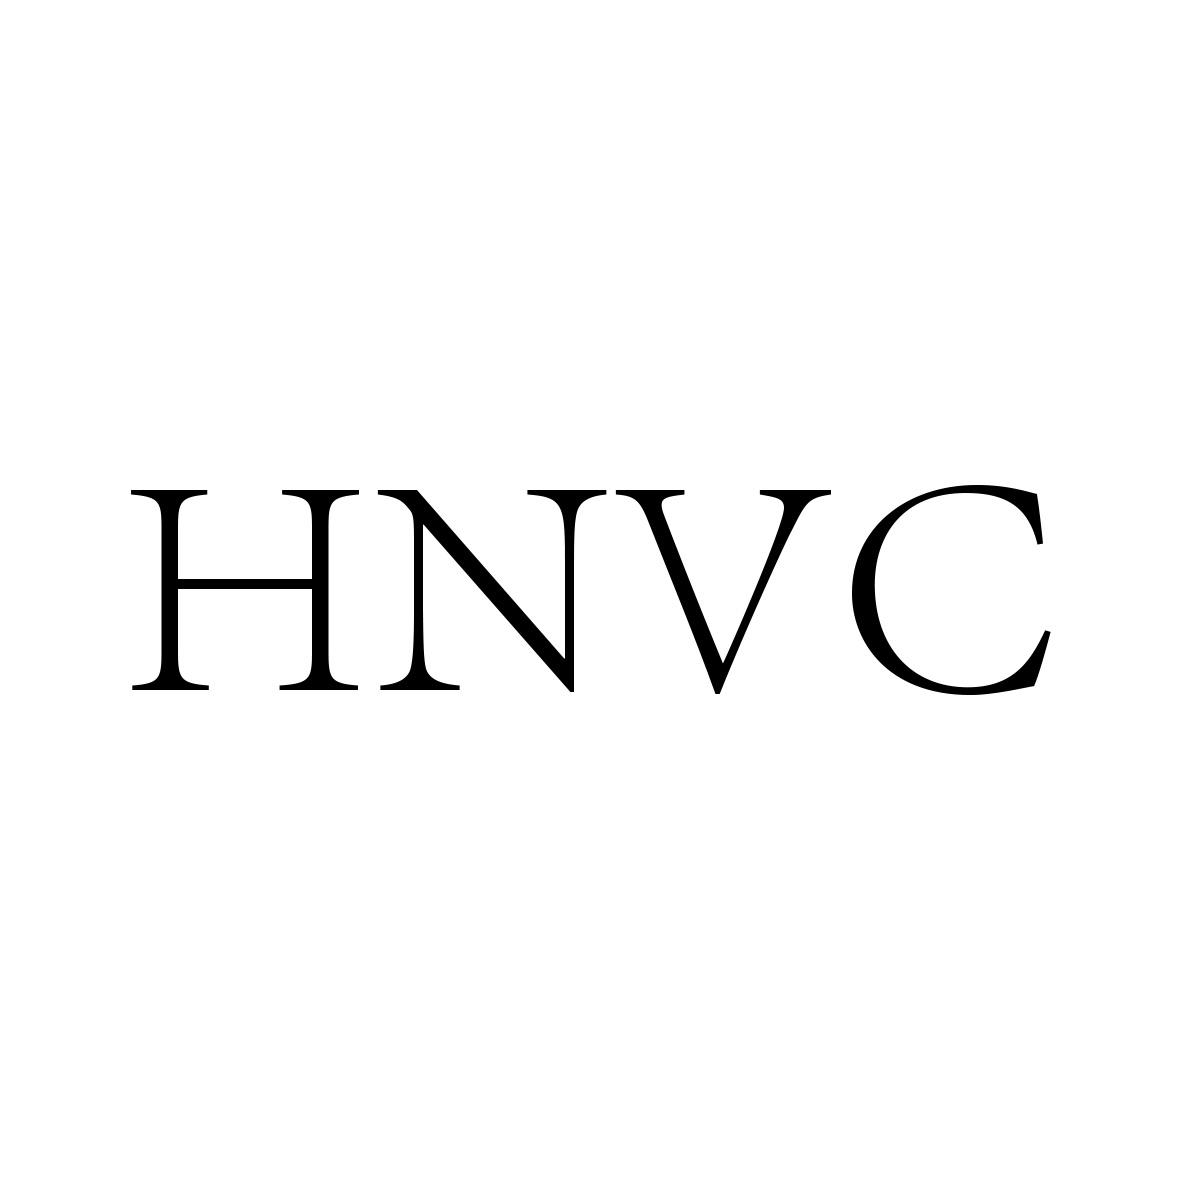 HNVC